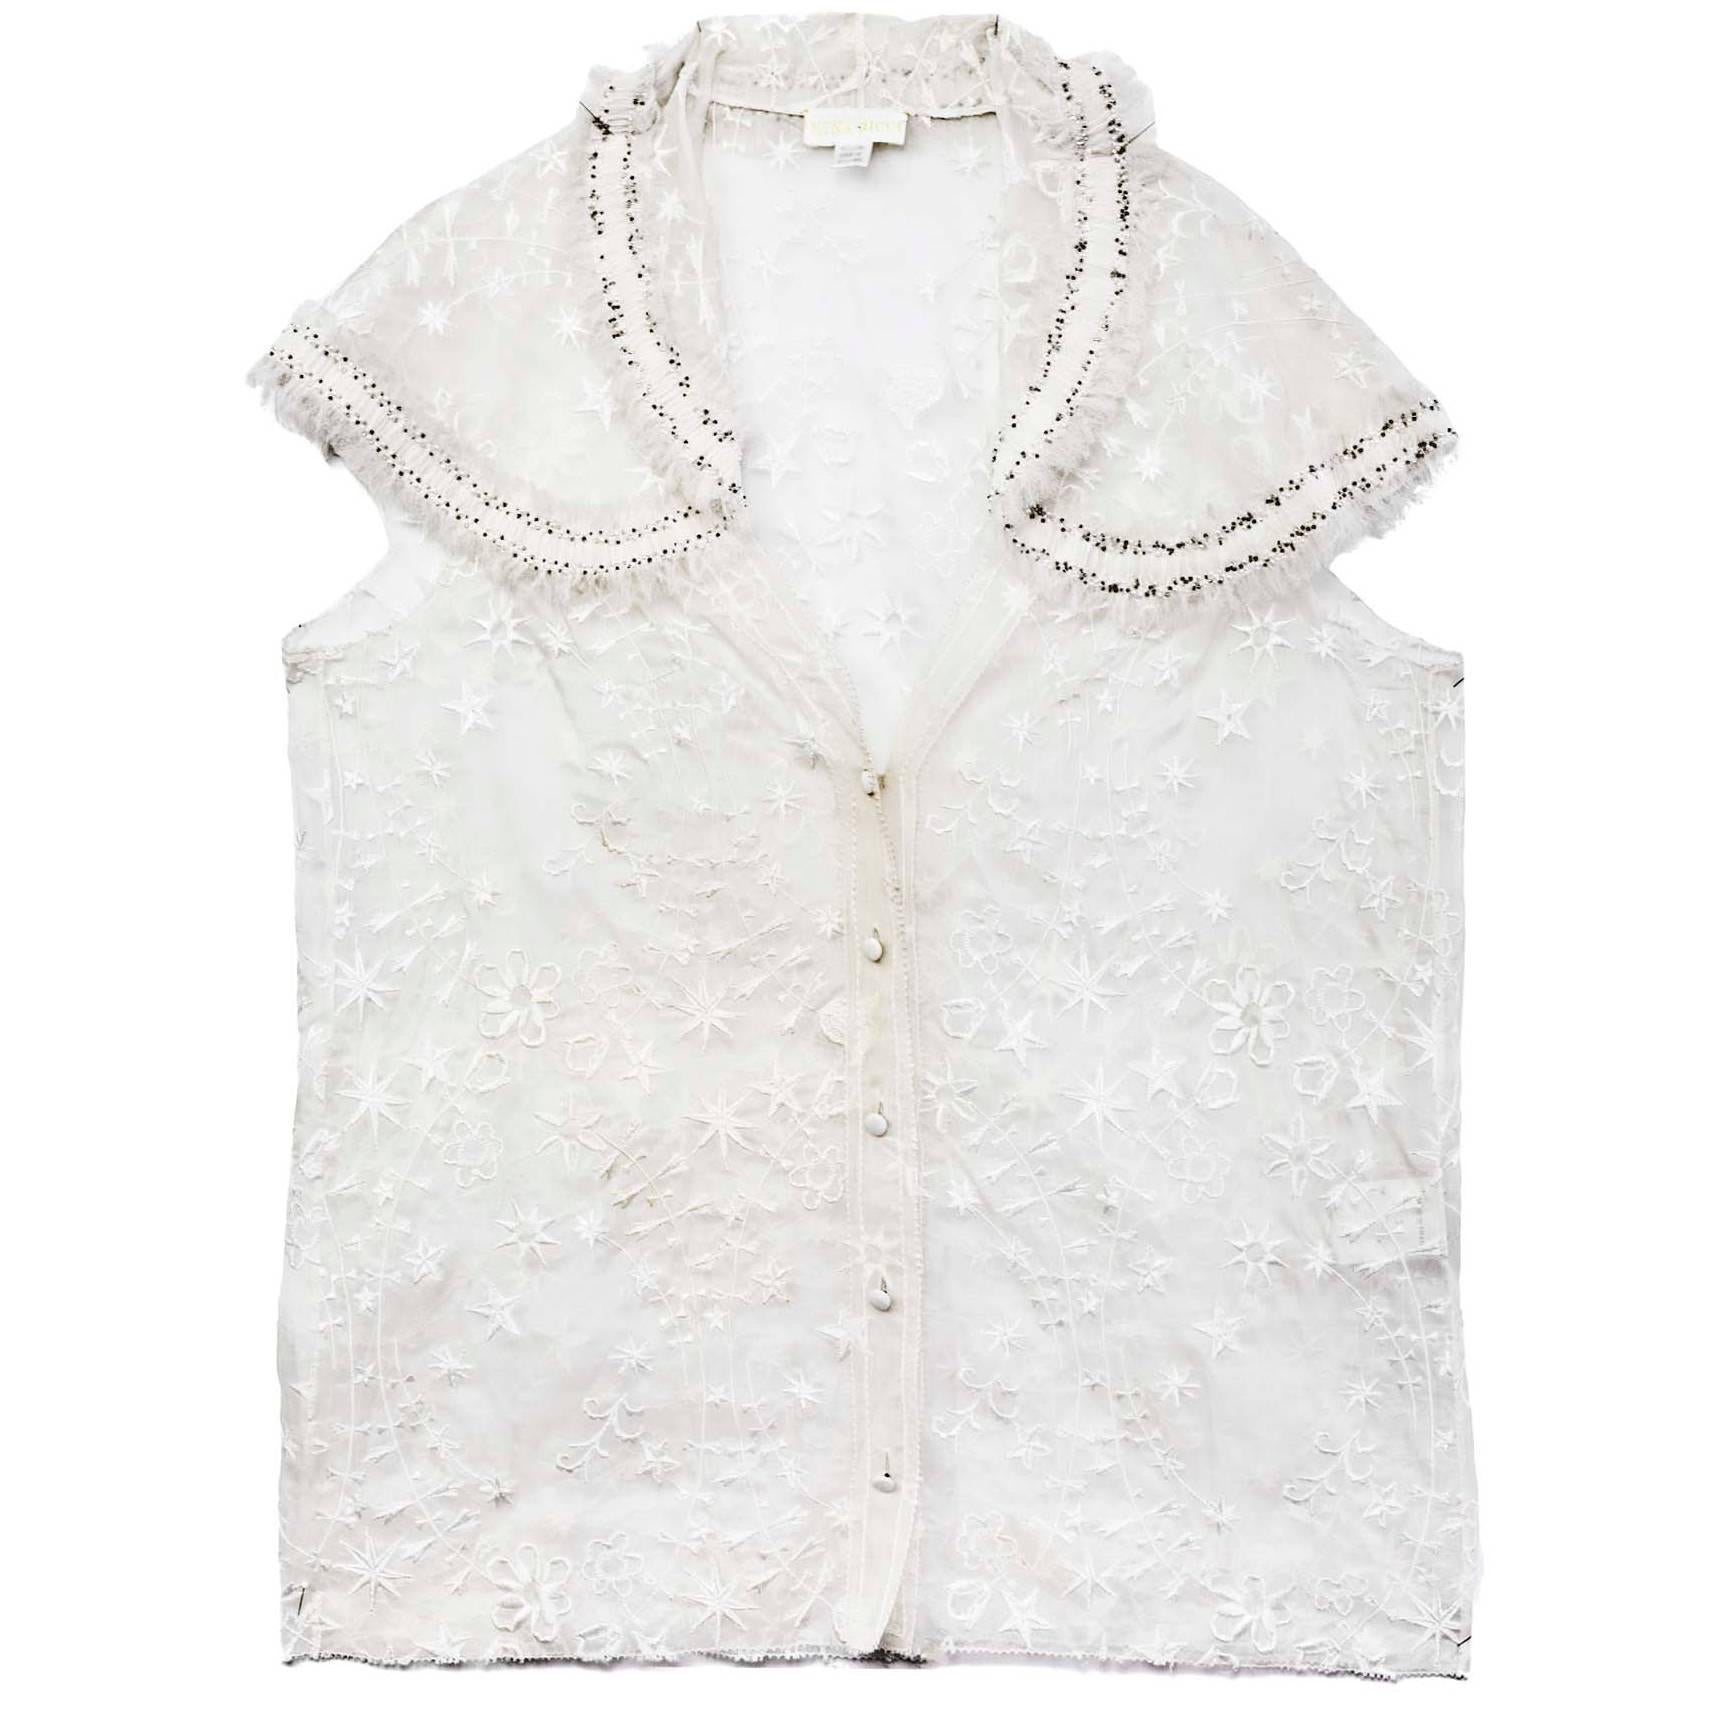 Nina Ricci White Embroidered Silk Cap Sleeve Top sz US4